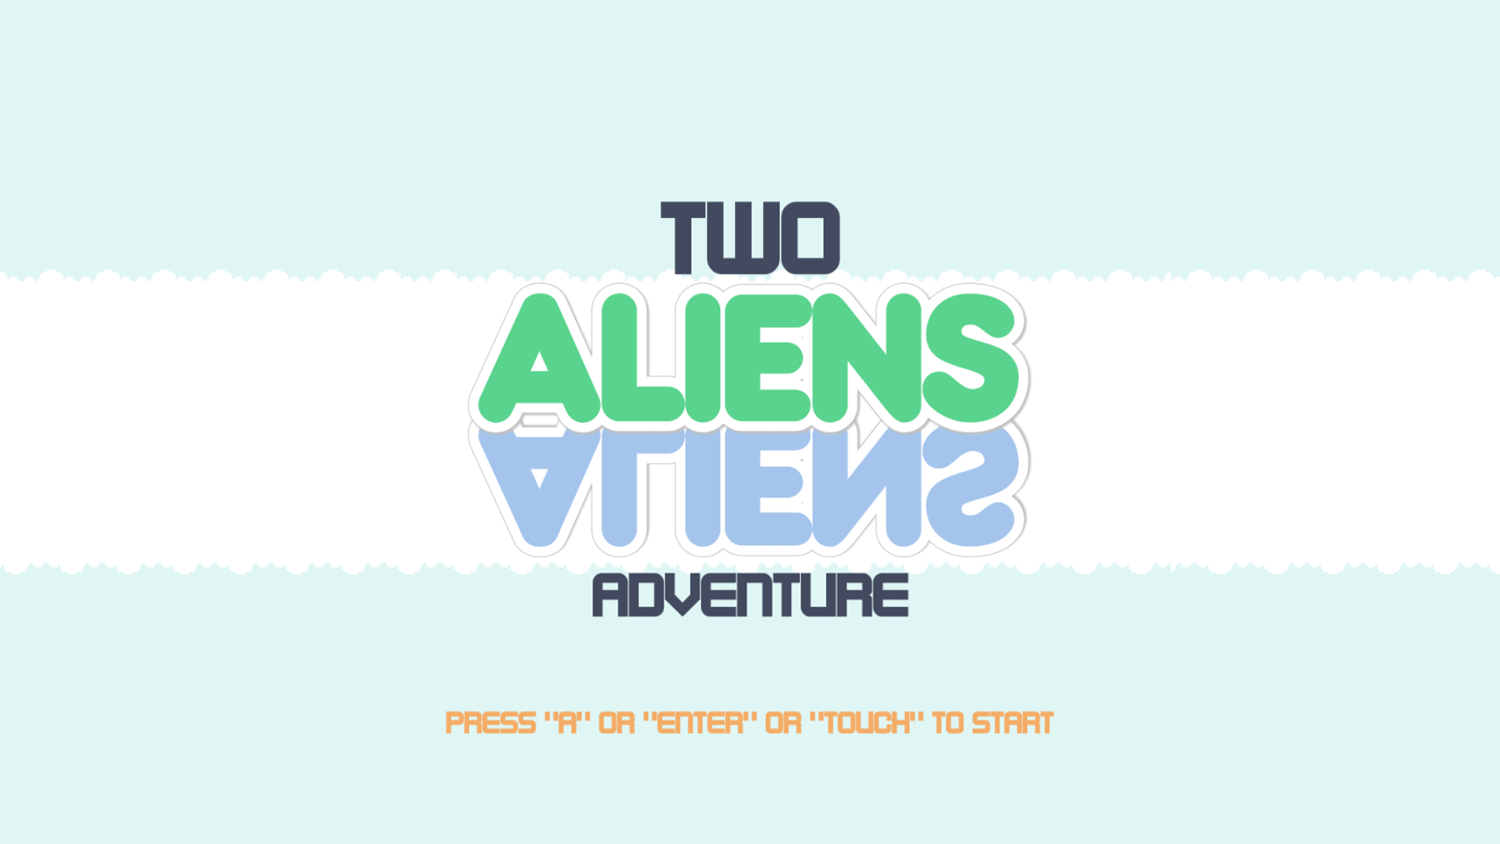 Two Aliens Adventure Welcome Screen Screenshot.